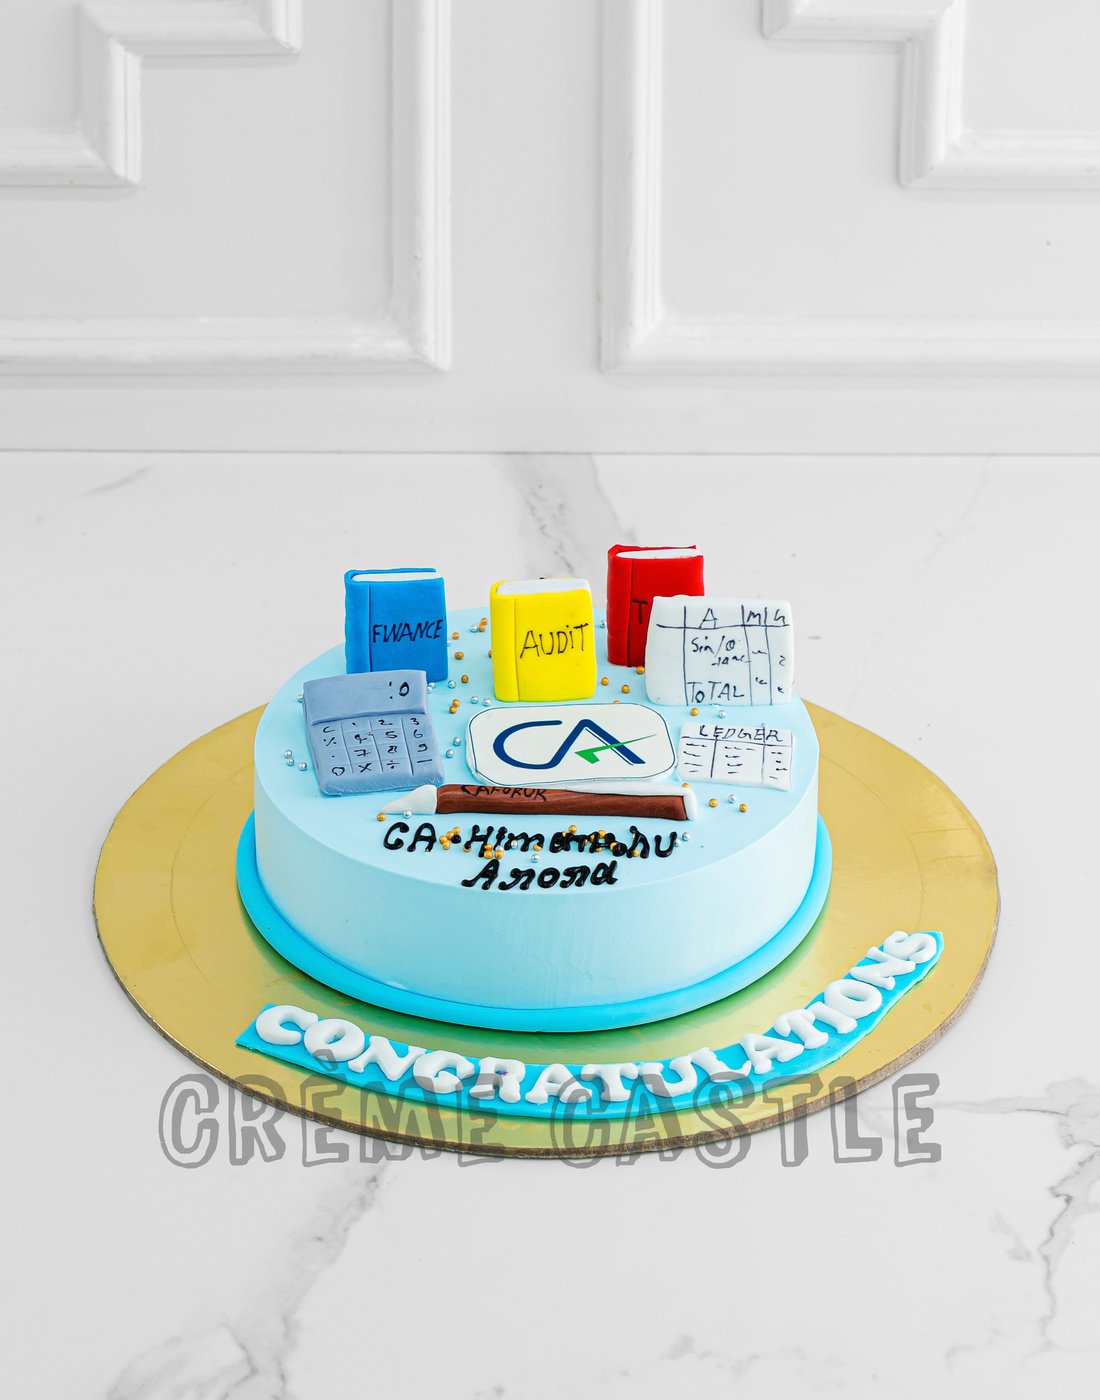 Cake Designs for Husband - Finance and Work Theme Cake - Designer Cake in Gurgaon